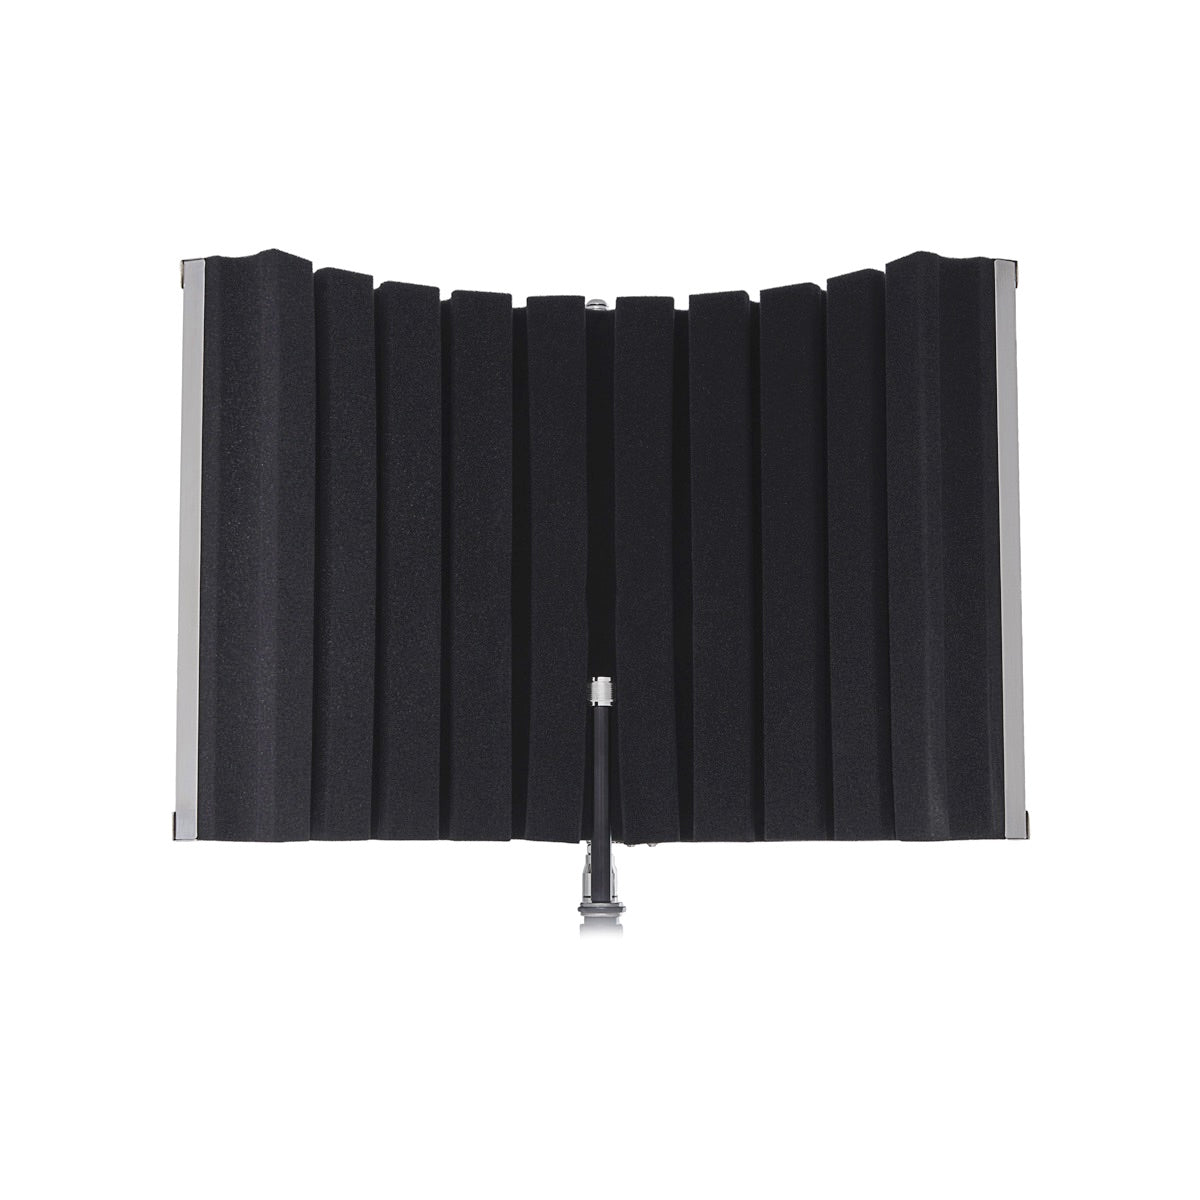 Marantz Sound Shield Compact - Vocal Reflection Filter, front